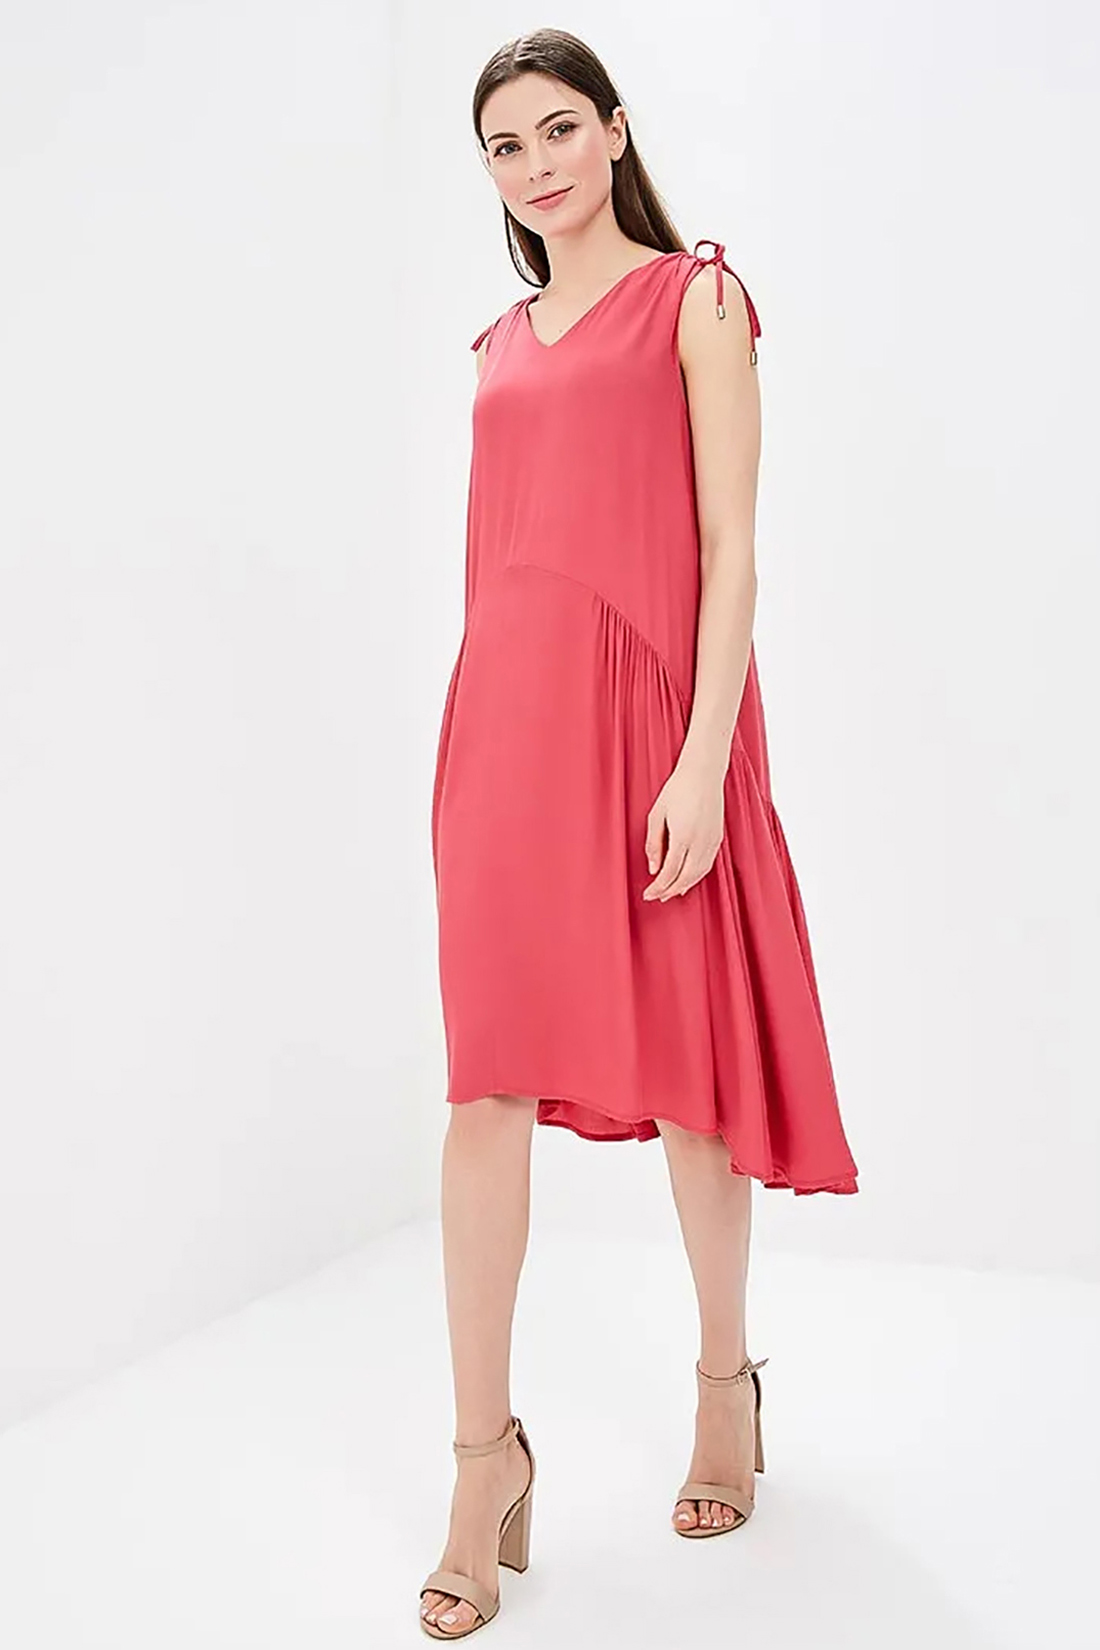 Платье со сборками на плечах (арт. baon B458075), размер XL, цвет розовый Платье со сборками на плечах (арт. baon B458075) - фото 1